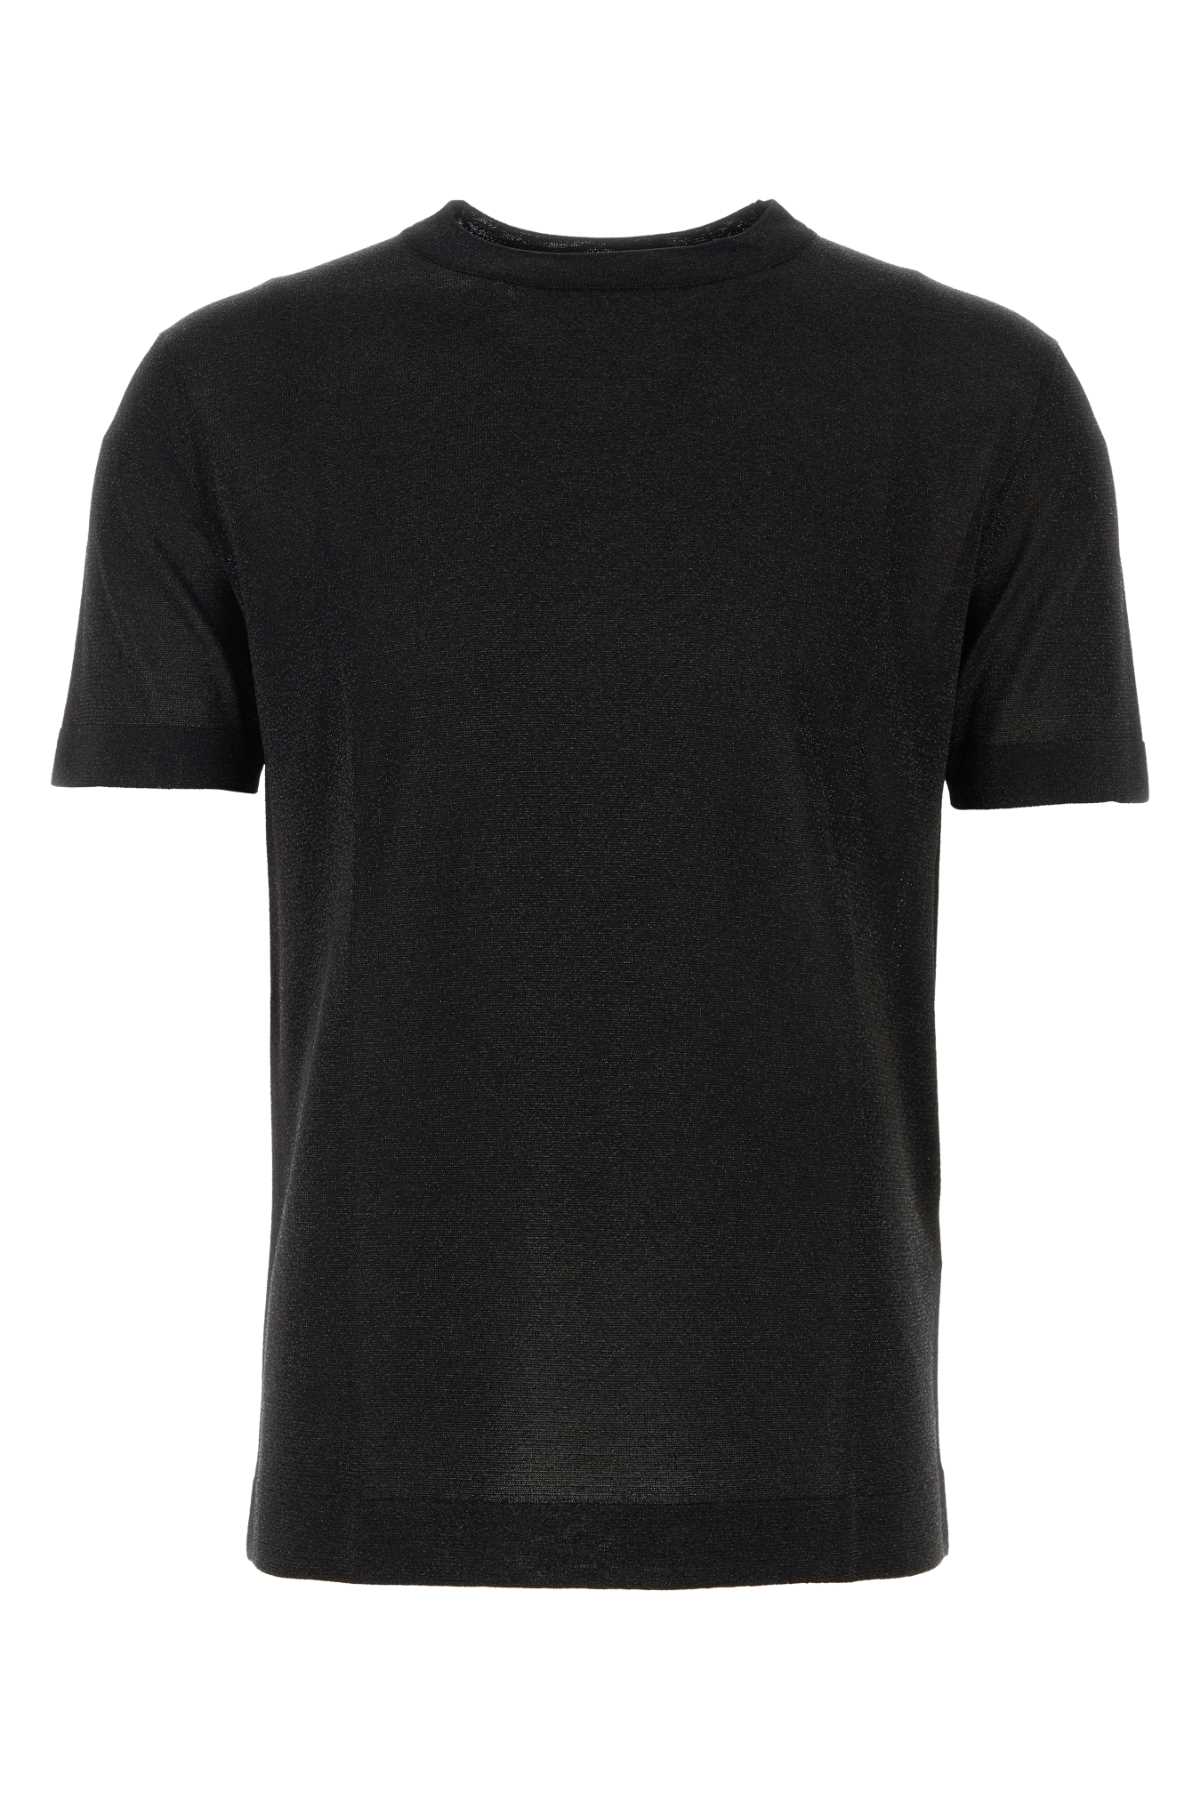 Black Viscose Blend T-shirt